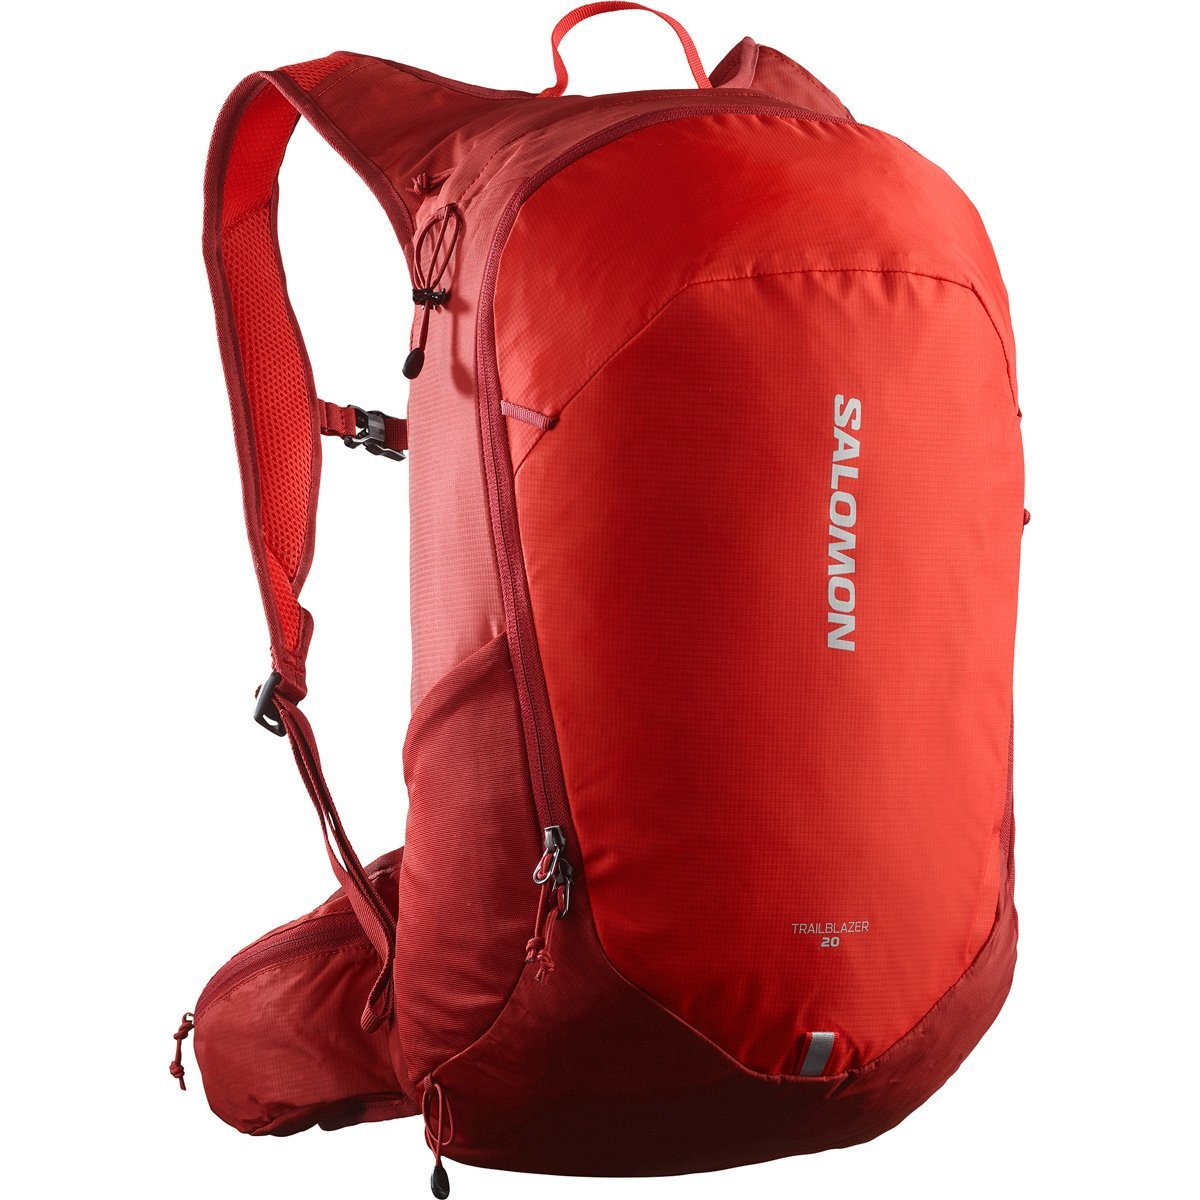 Salomon Trailblazer 20 Hiking Rygsæk, rød